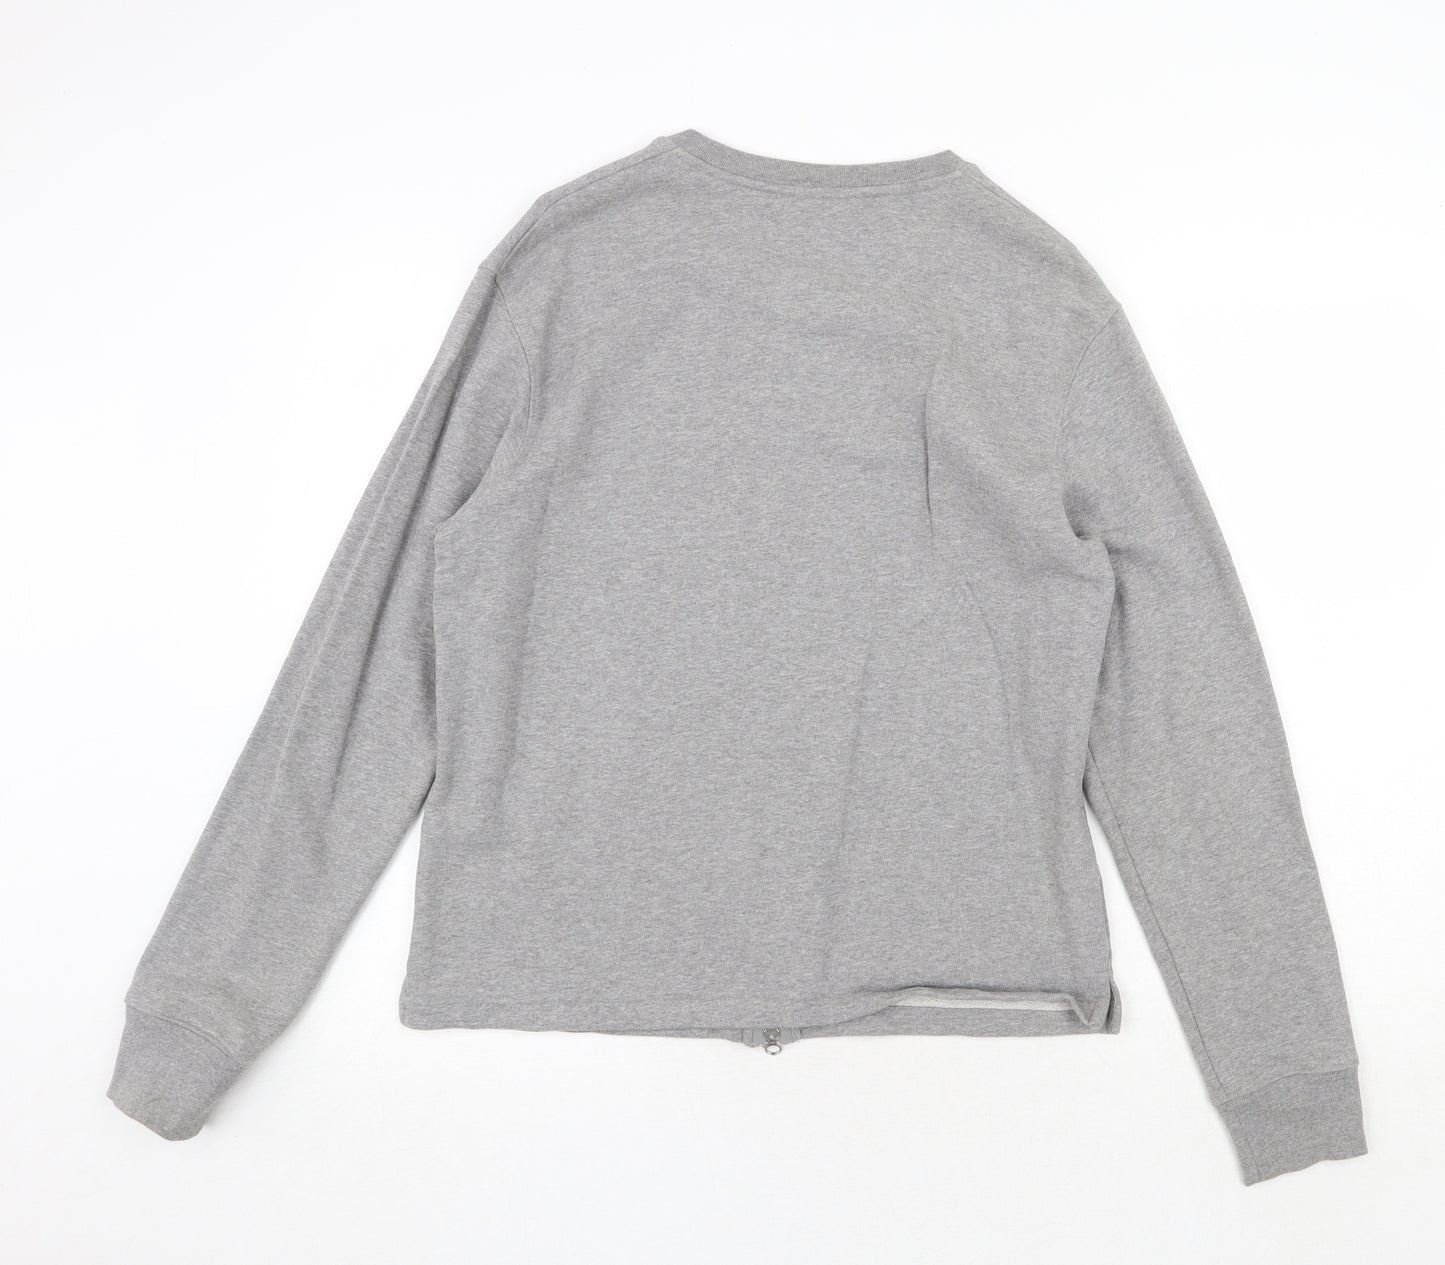 Setton Mens Grey Polyester Full Zip Sweatshirt Size L Zip